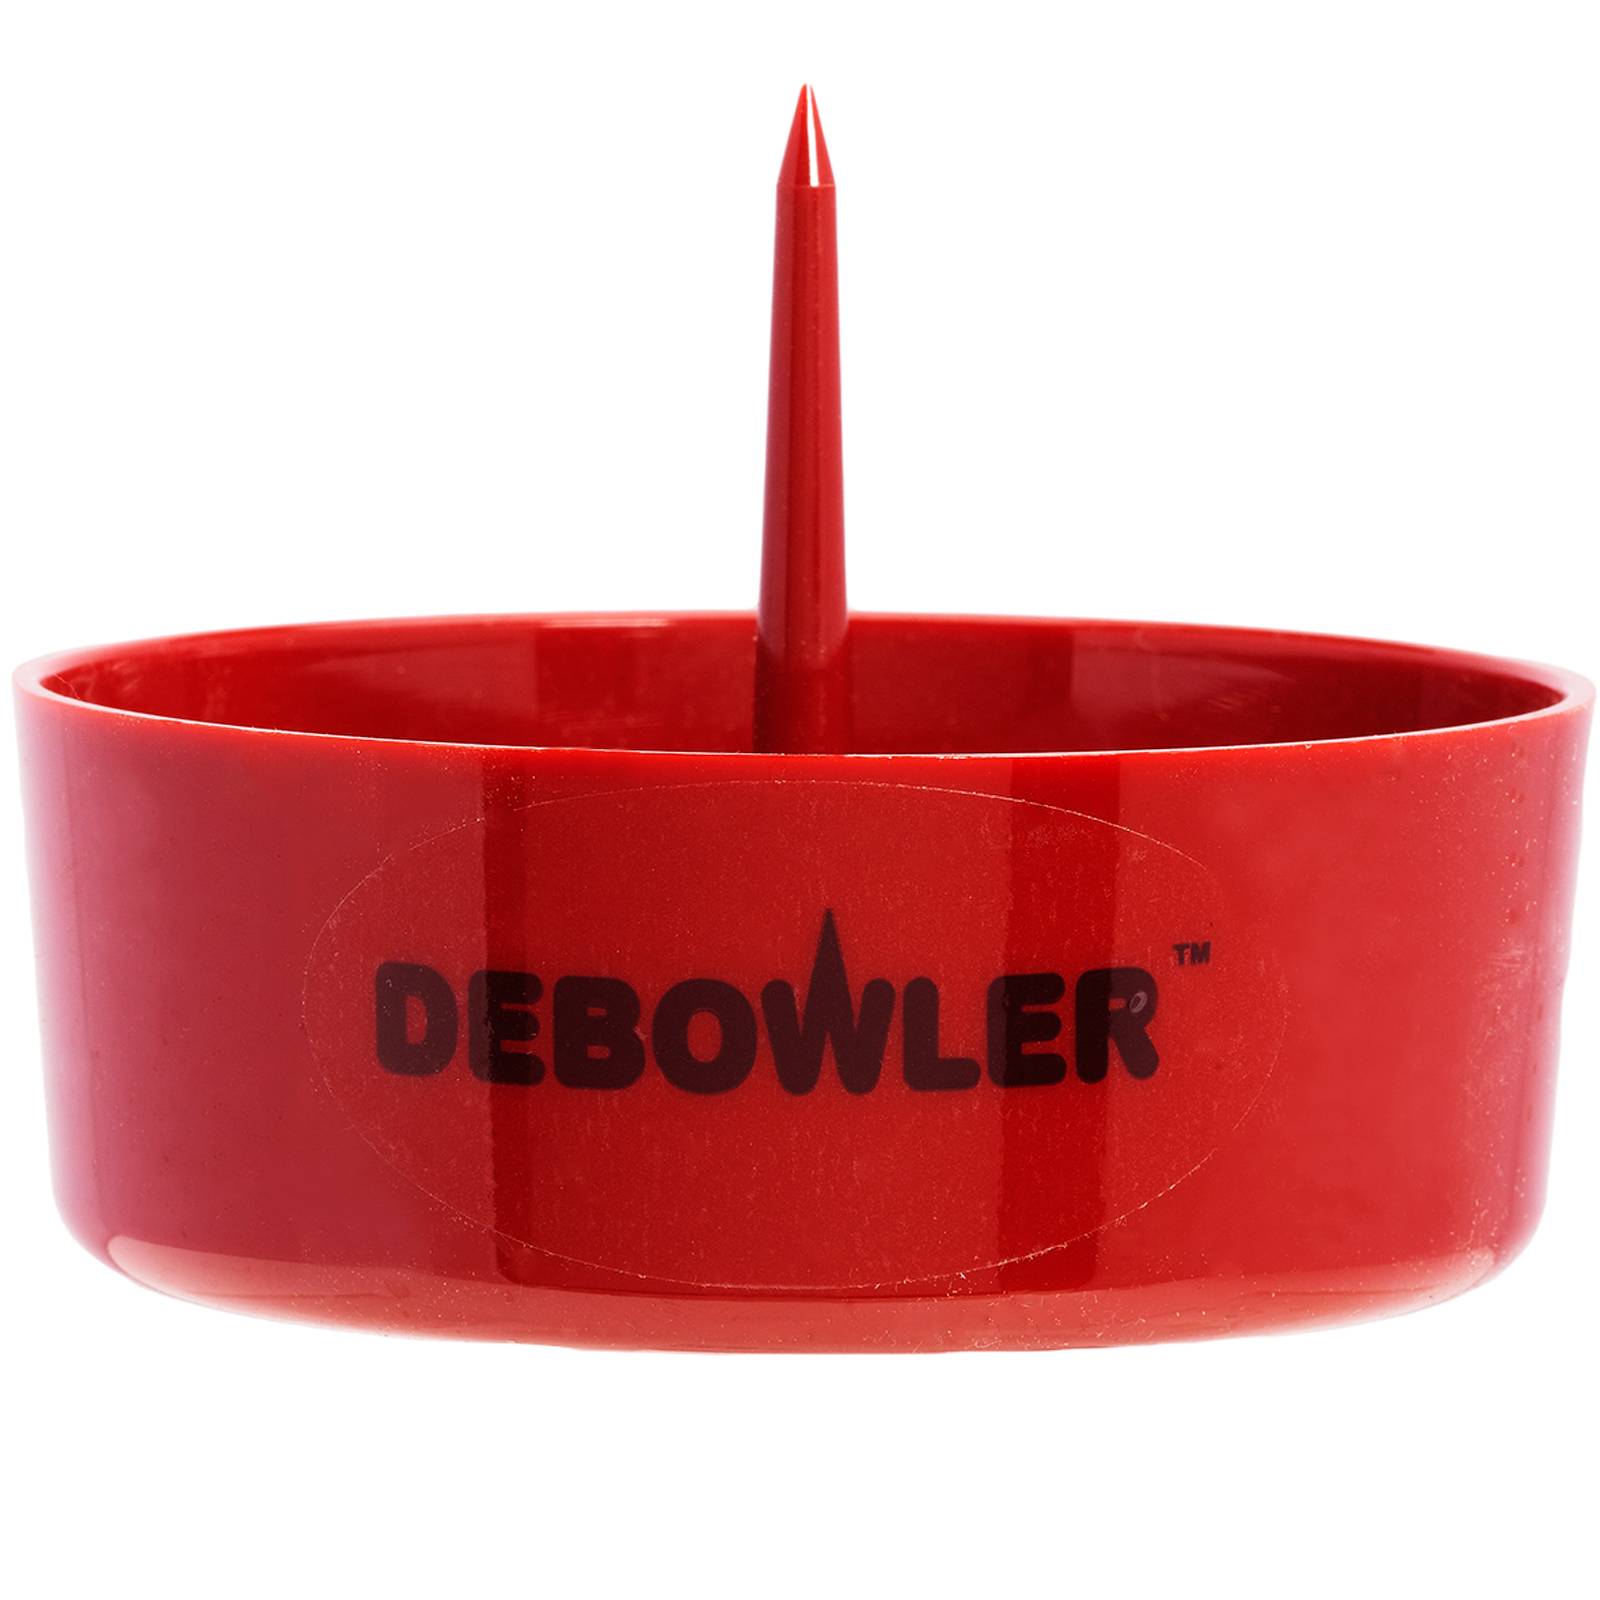 Debowler Red Ashtray